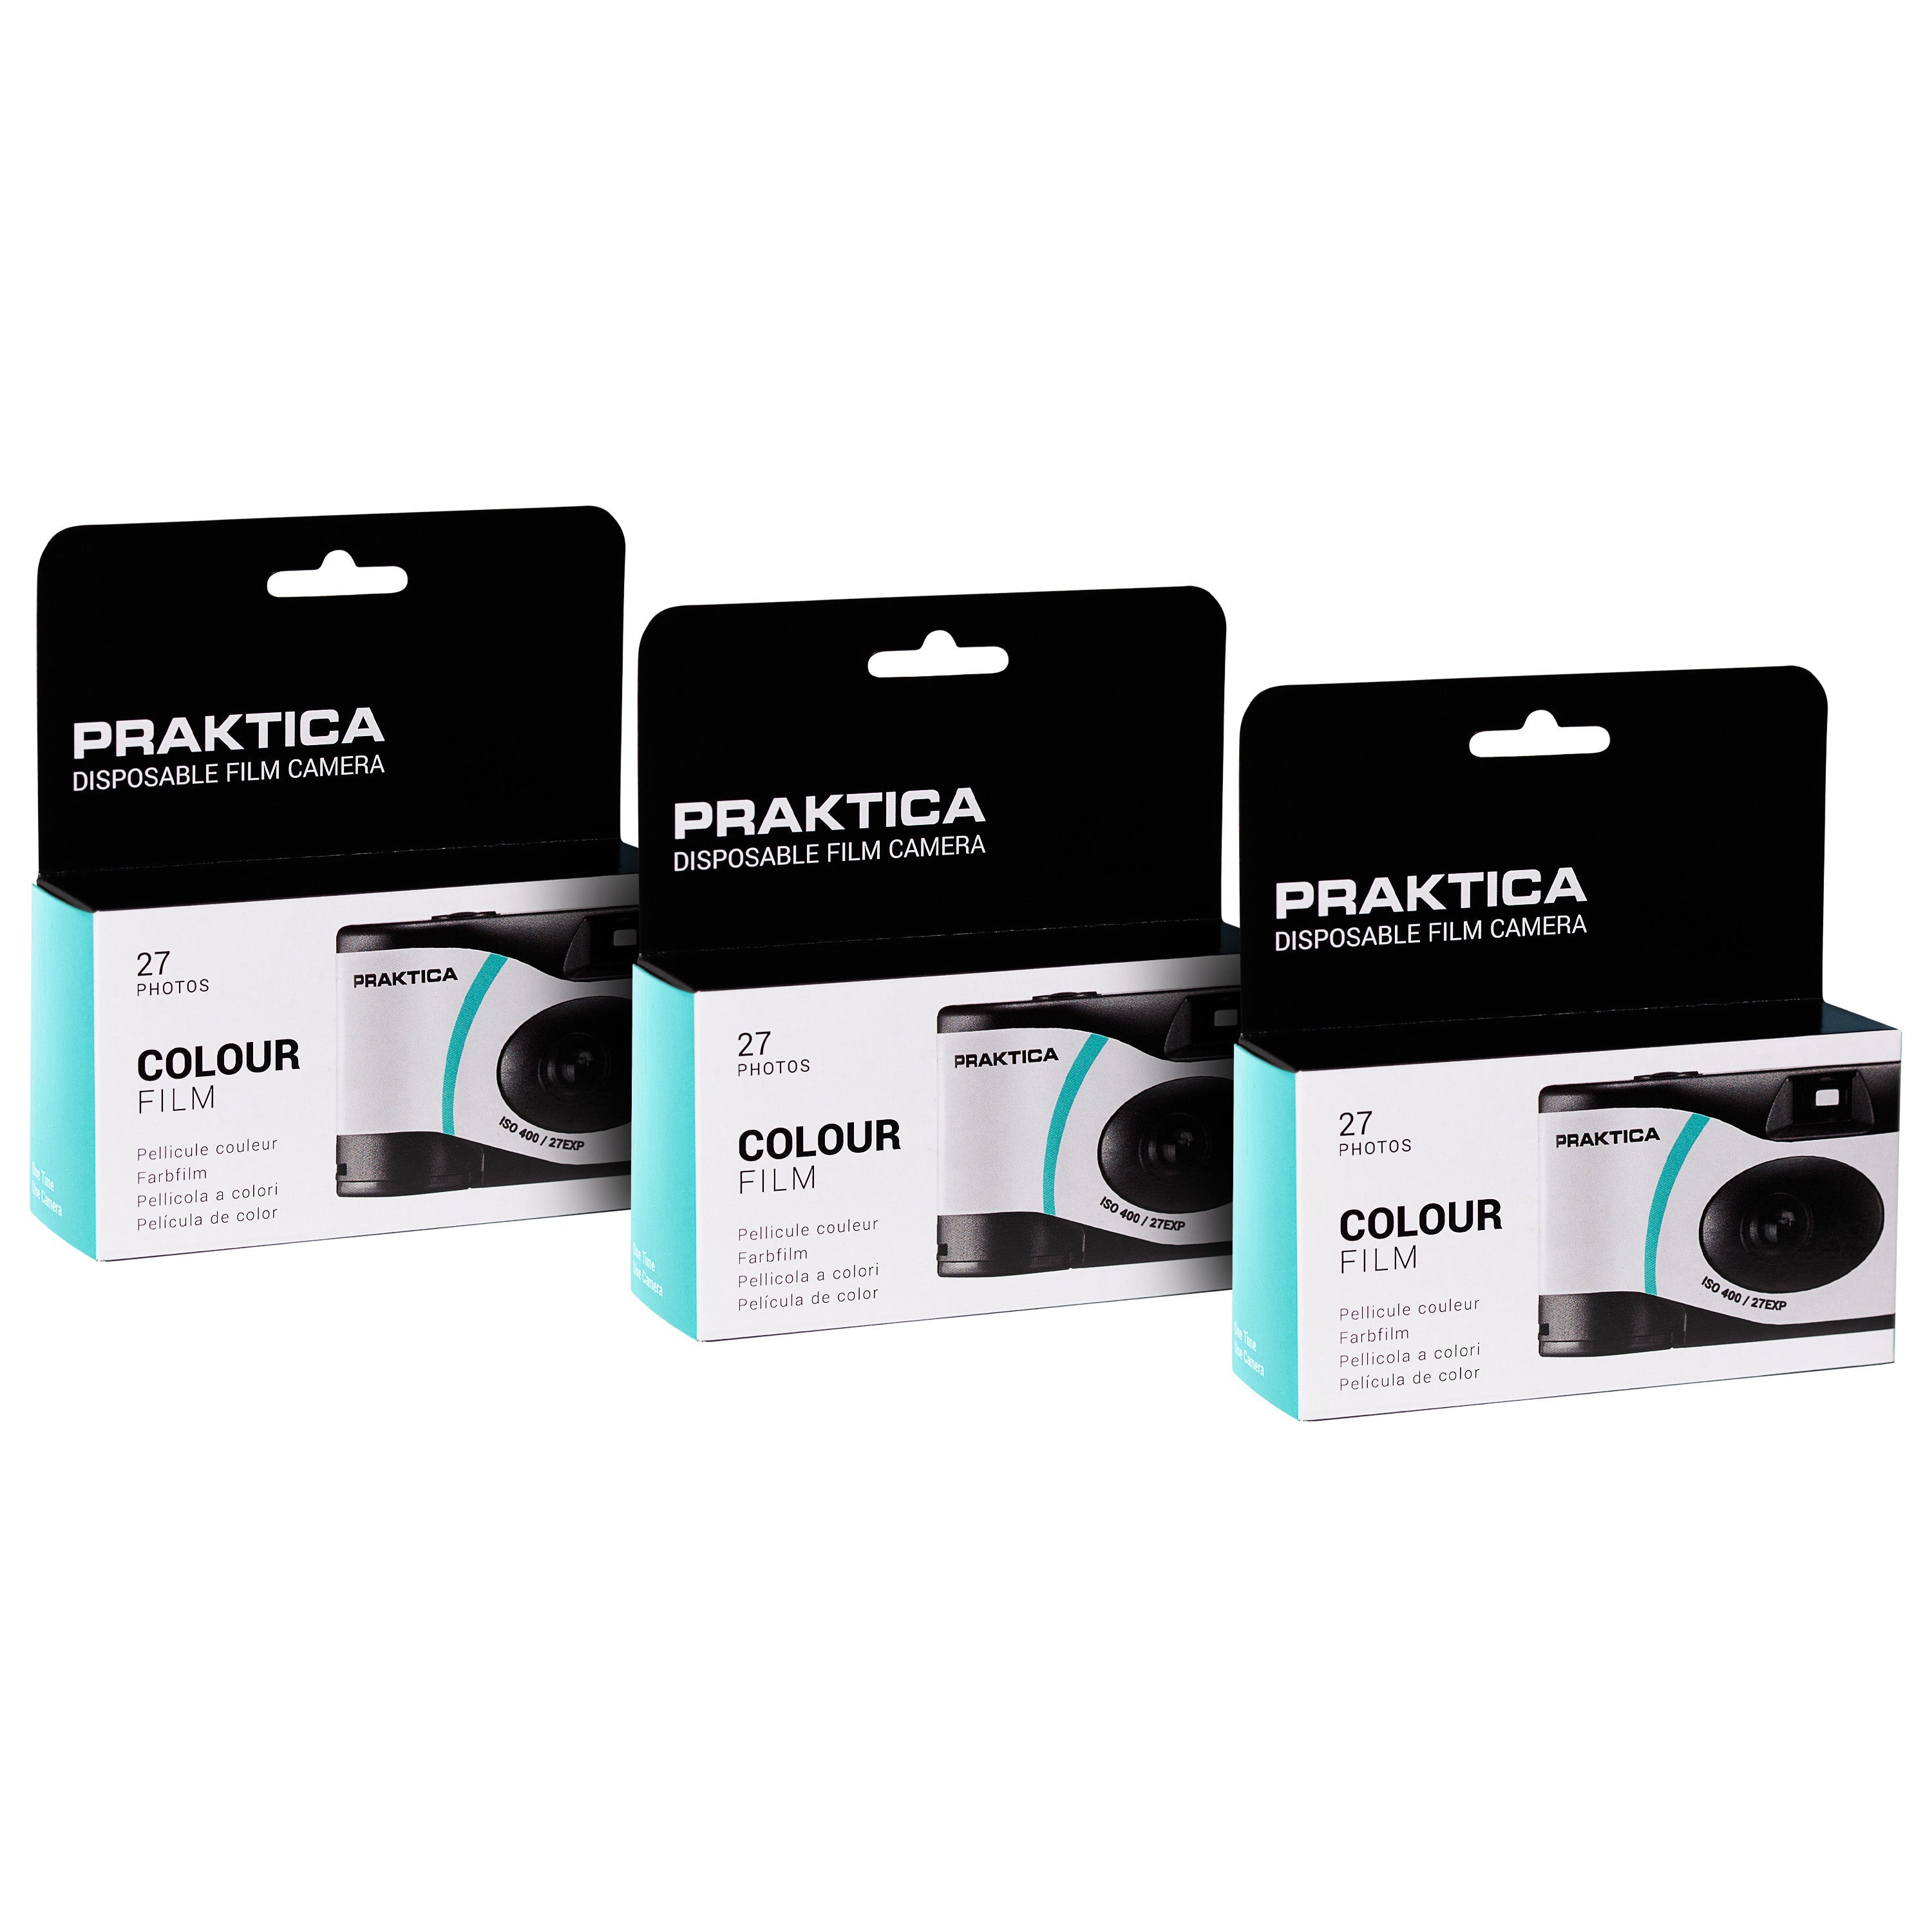 PRAKTICA Luxmedia 35mm Disposable Film Camera with Flash & 27 Exposure ISO400 Film (Pack of 3)